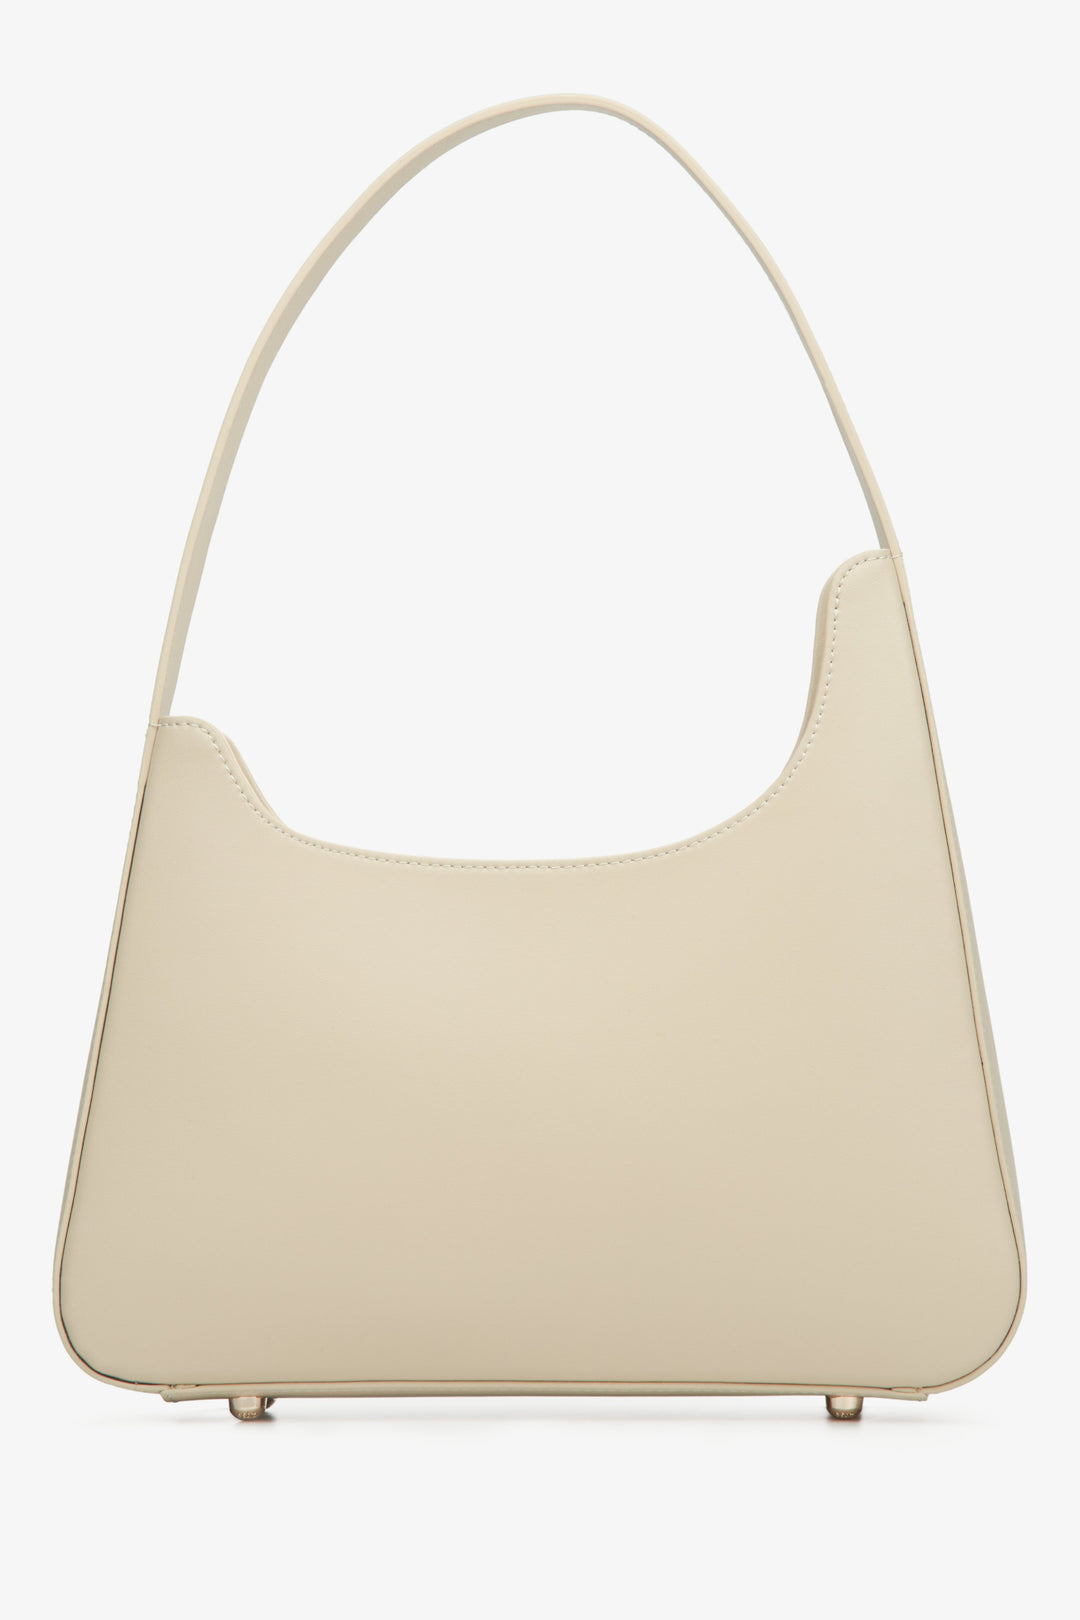 Women's light beige handbag Estro.